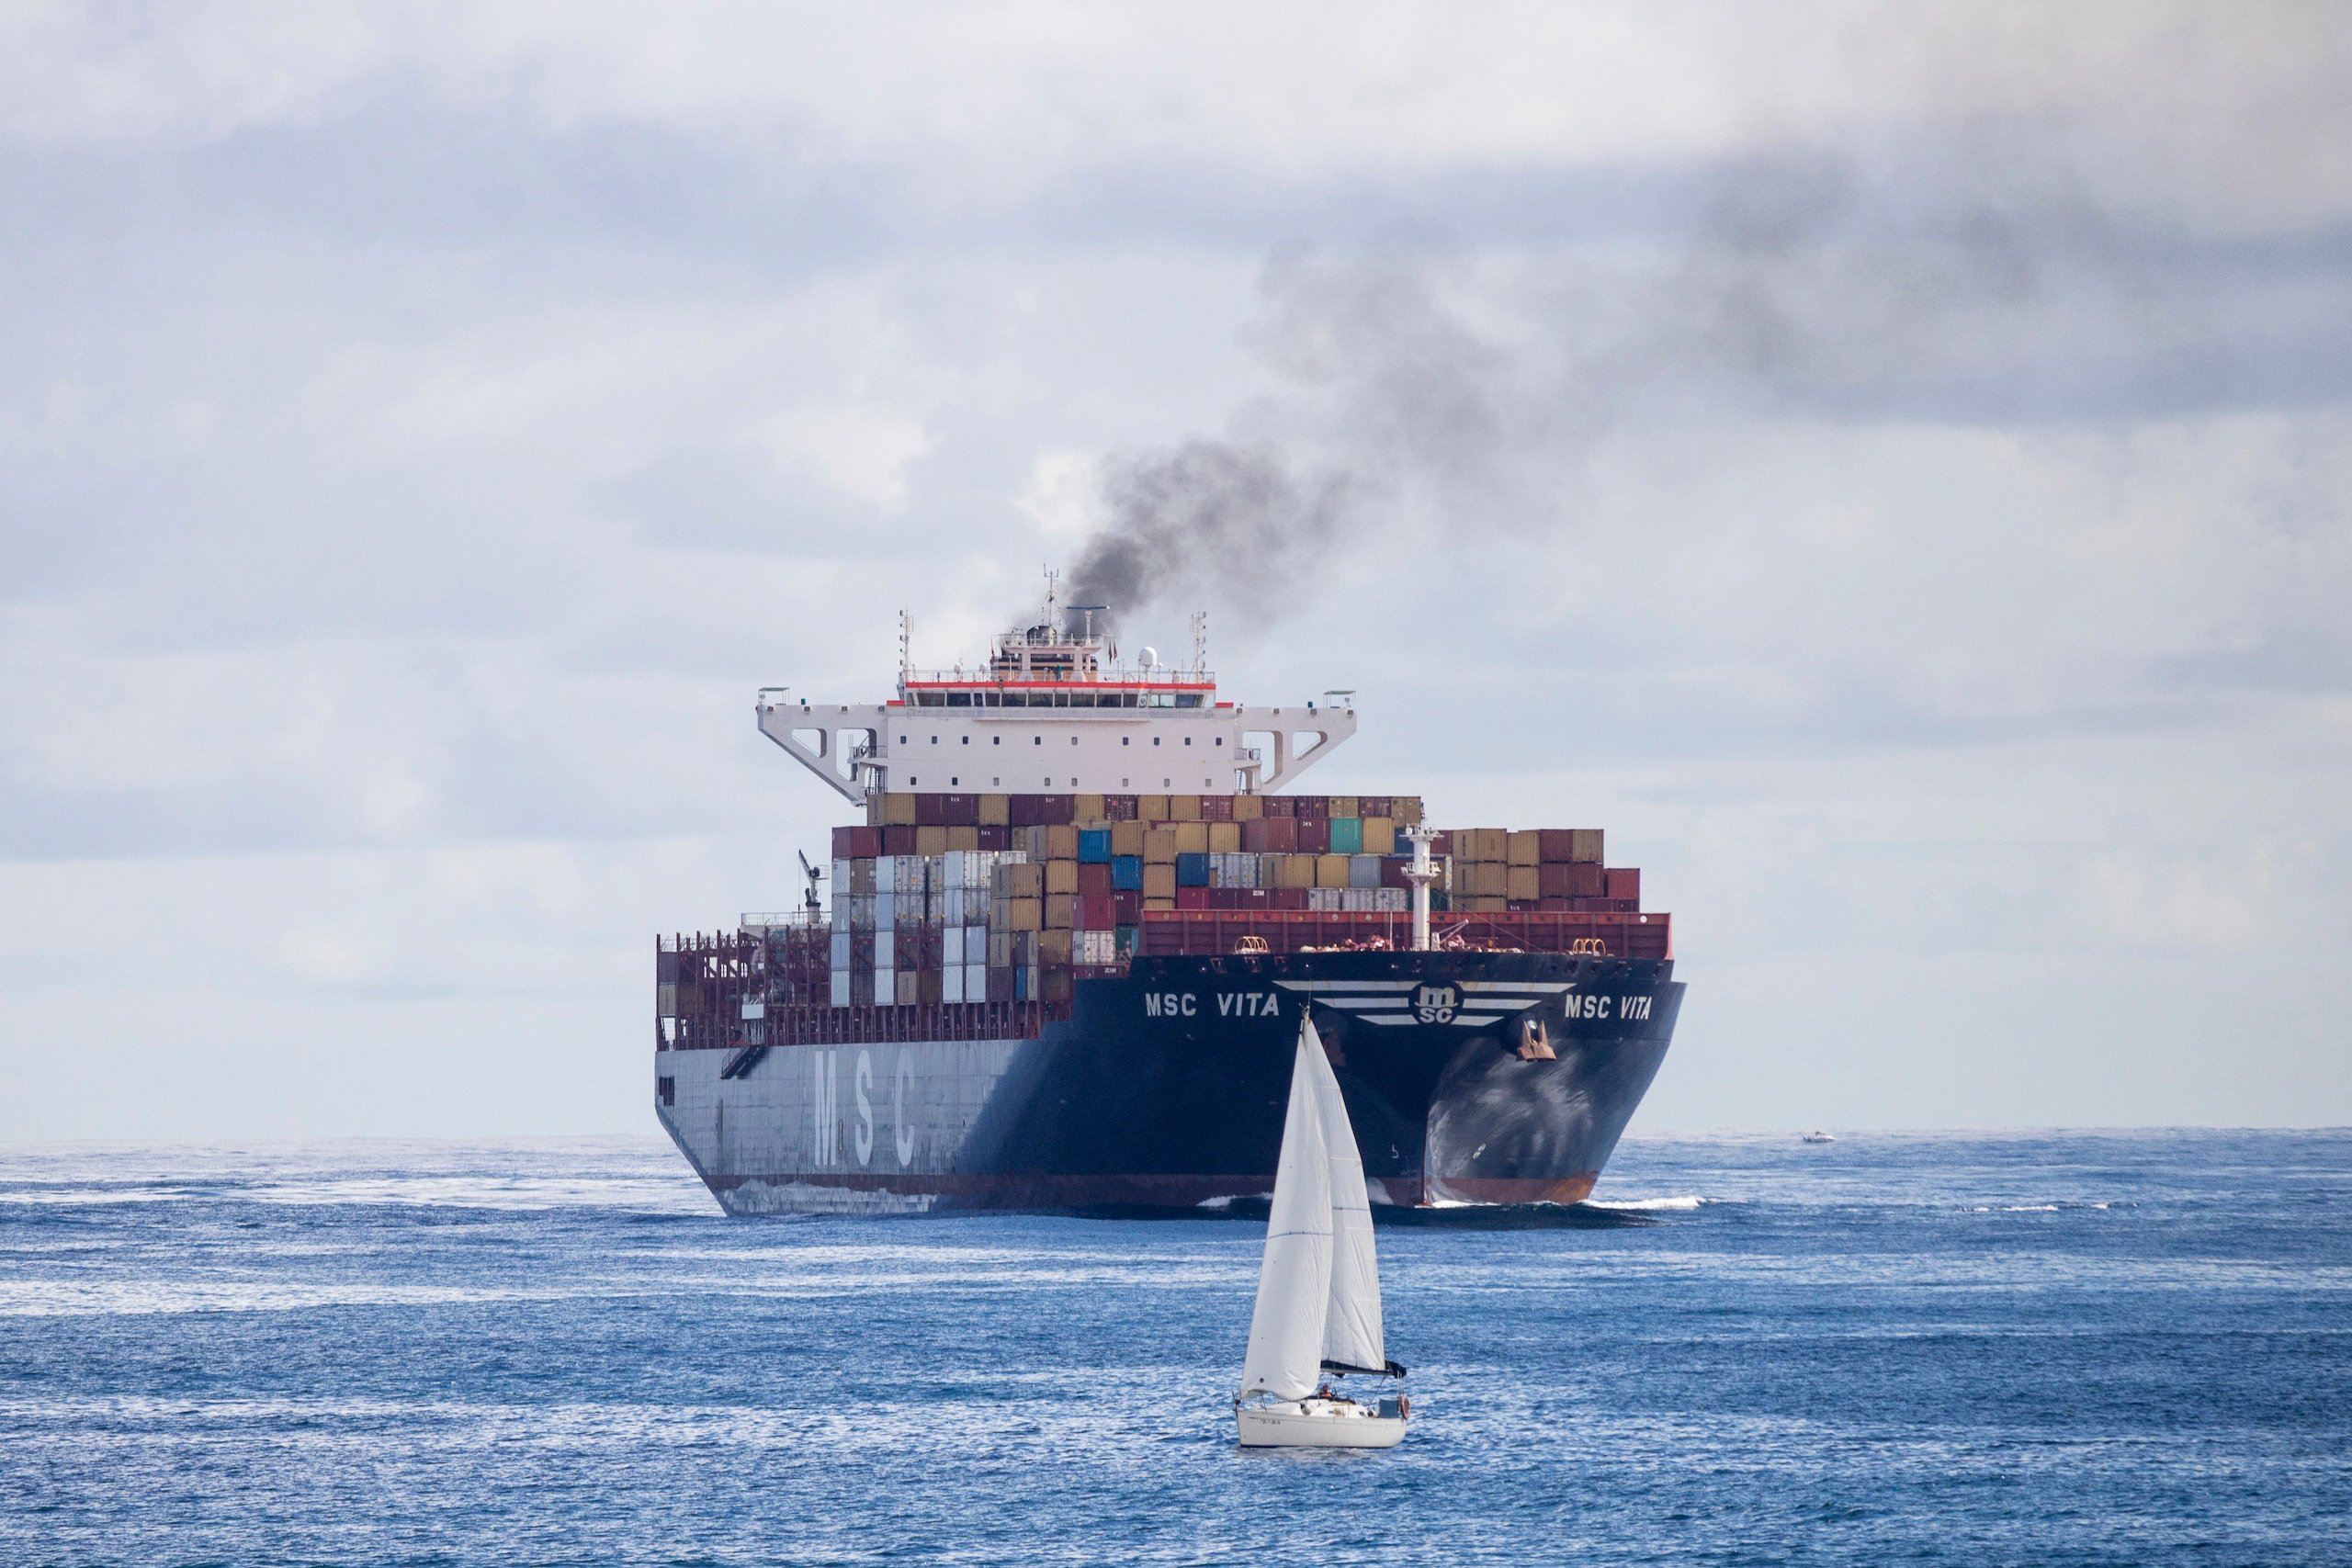 <p>西班牙大加那利岛（Gran Canaria）拉斯帕马斯港（Las Palmas）, MSC Vita号集装箱货船正驶入港口。航运业的石油年消耗量约占全球石油消费总量的5%，温室气体年排放超过10亿吨二氧化碳。图片来源：Rory Hailes / Alamy</p>